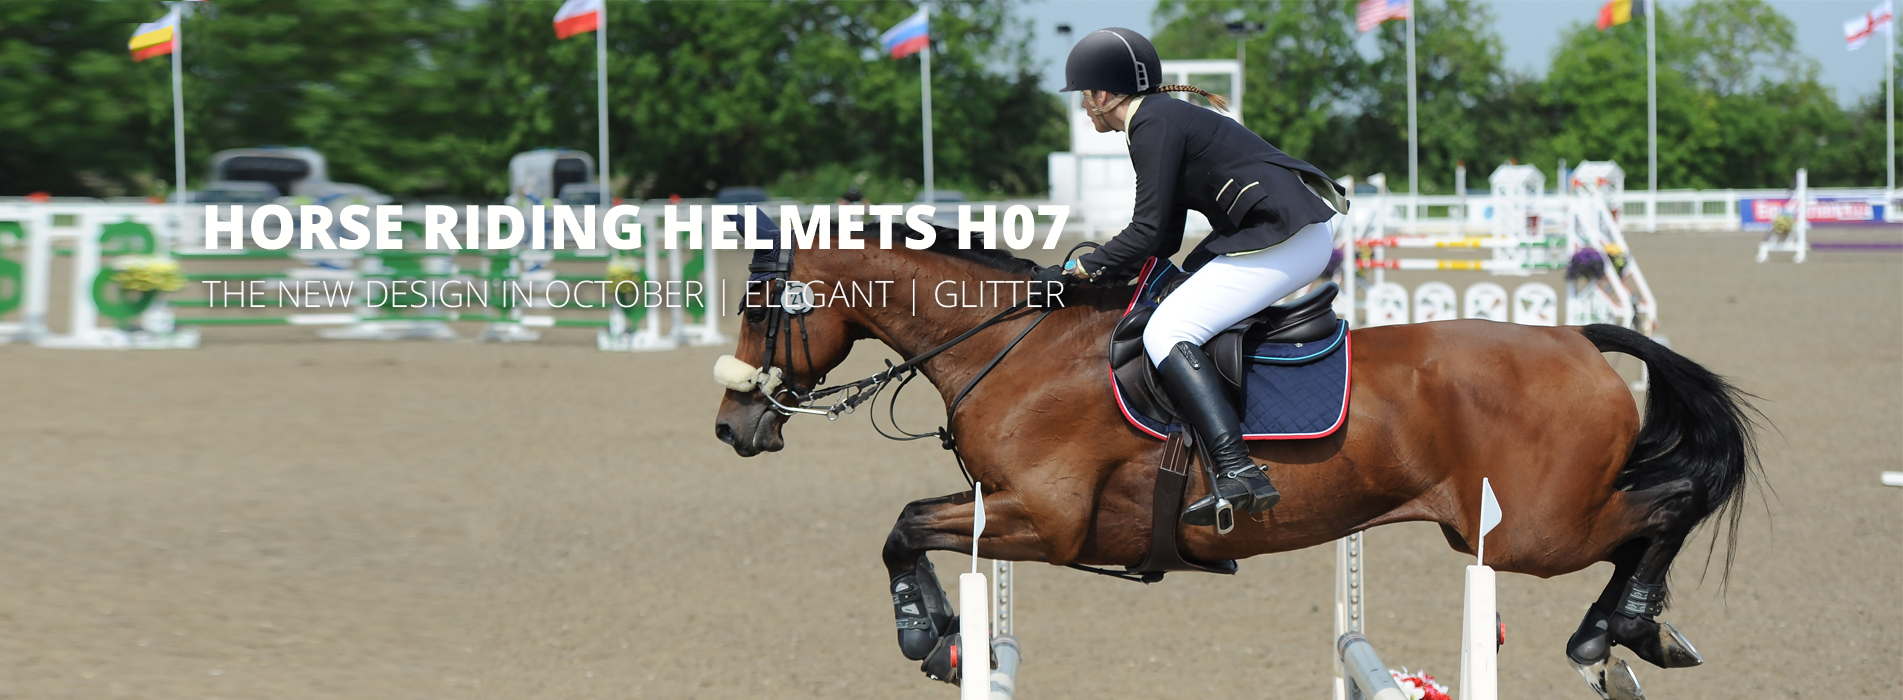 horse riding helmets h07 banner